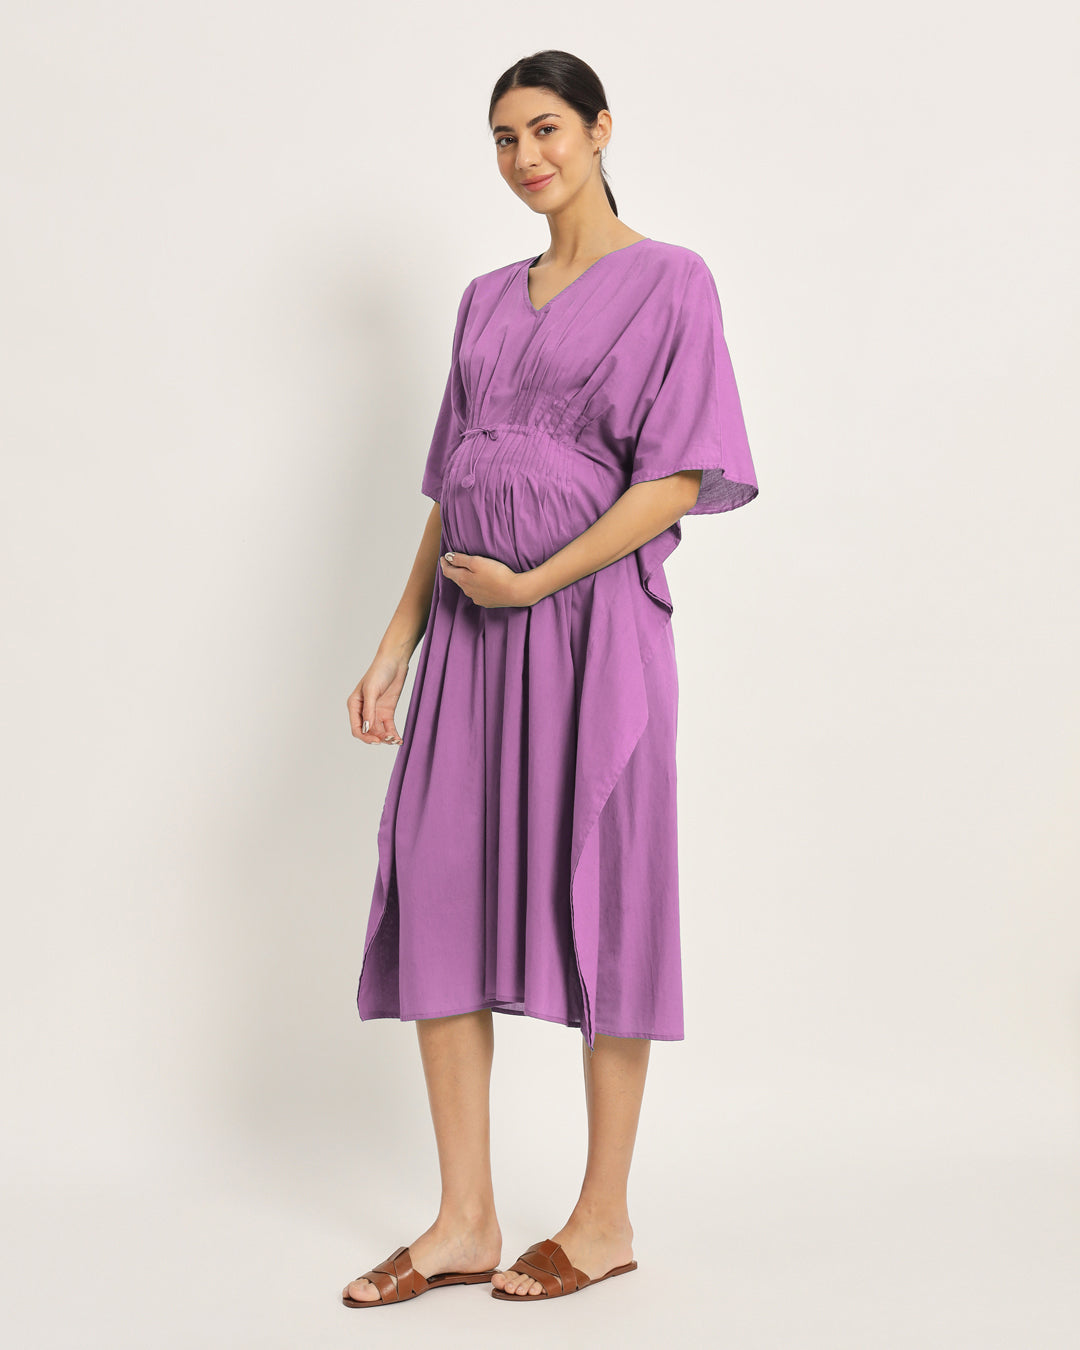 Combo: Russet Red & Wisteria Purple Mommy Mode Maternity & Nursing Dress